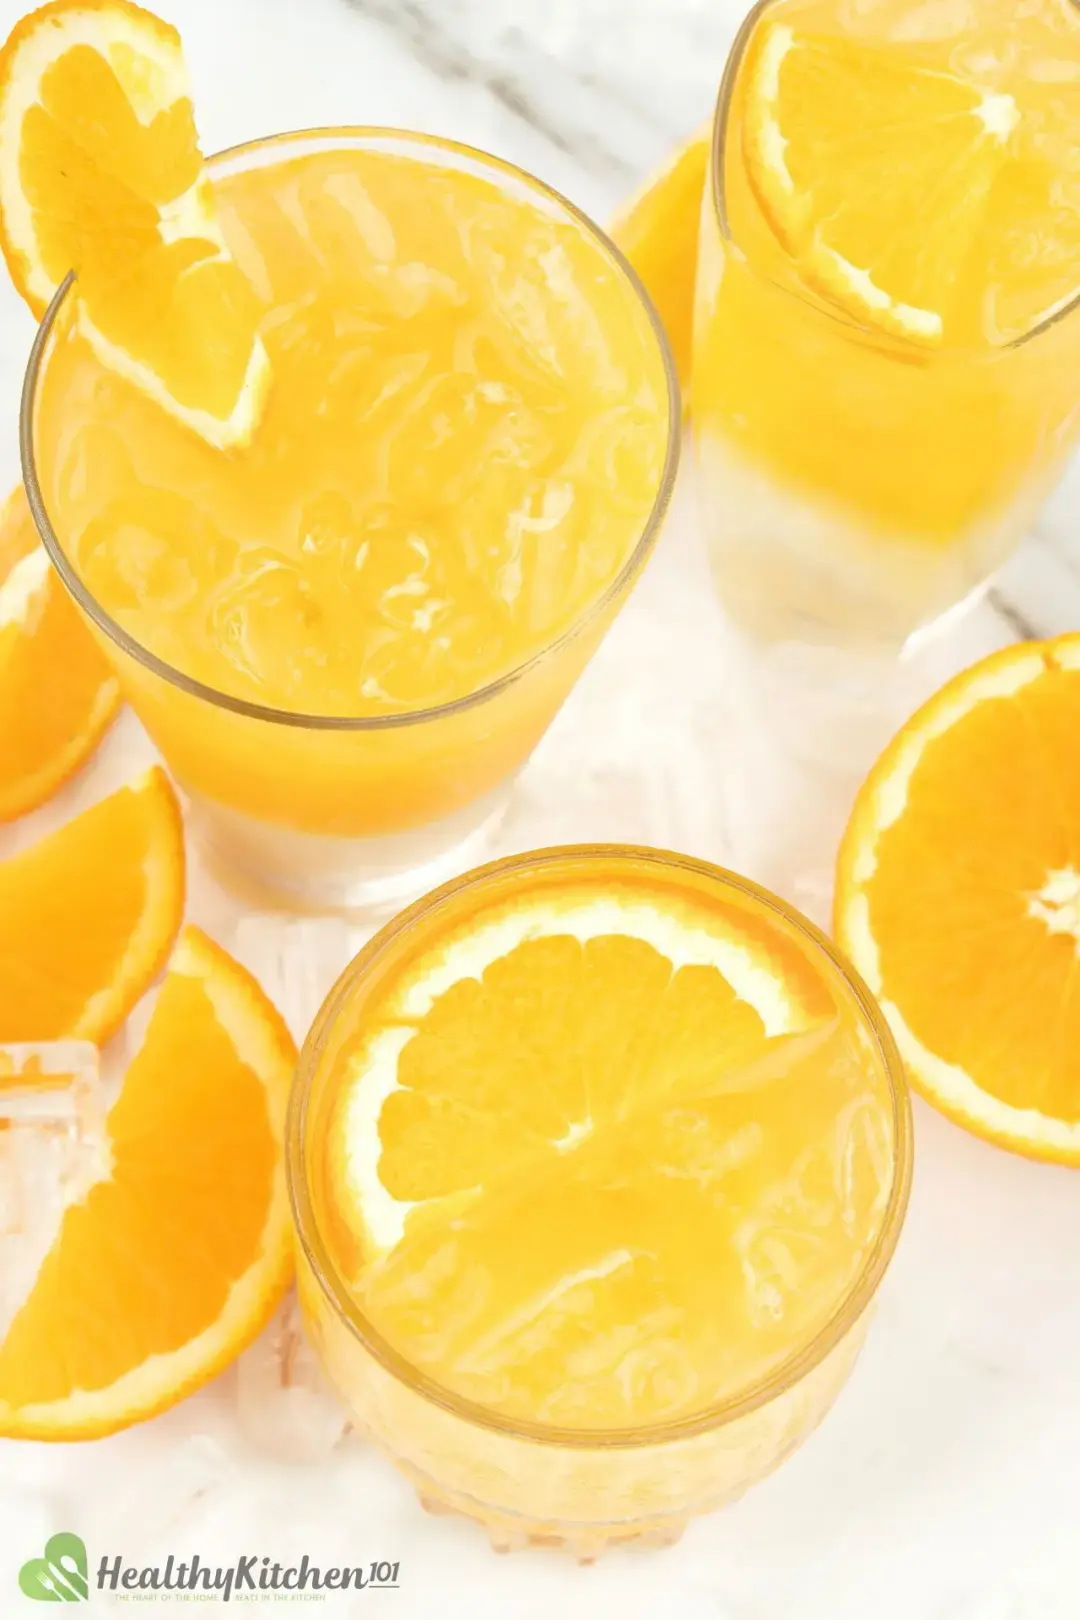 Glasses of orange juice and vodka put next to some orange wedges